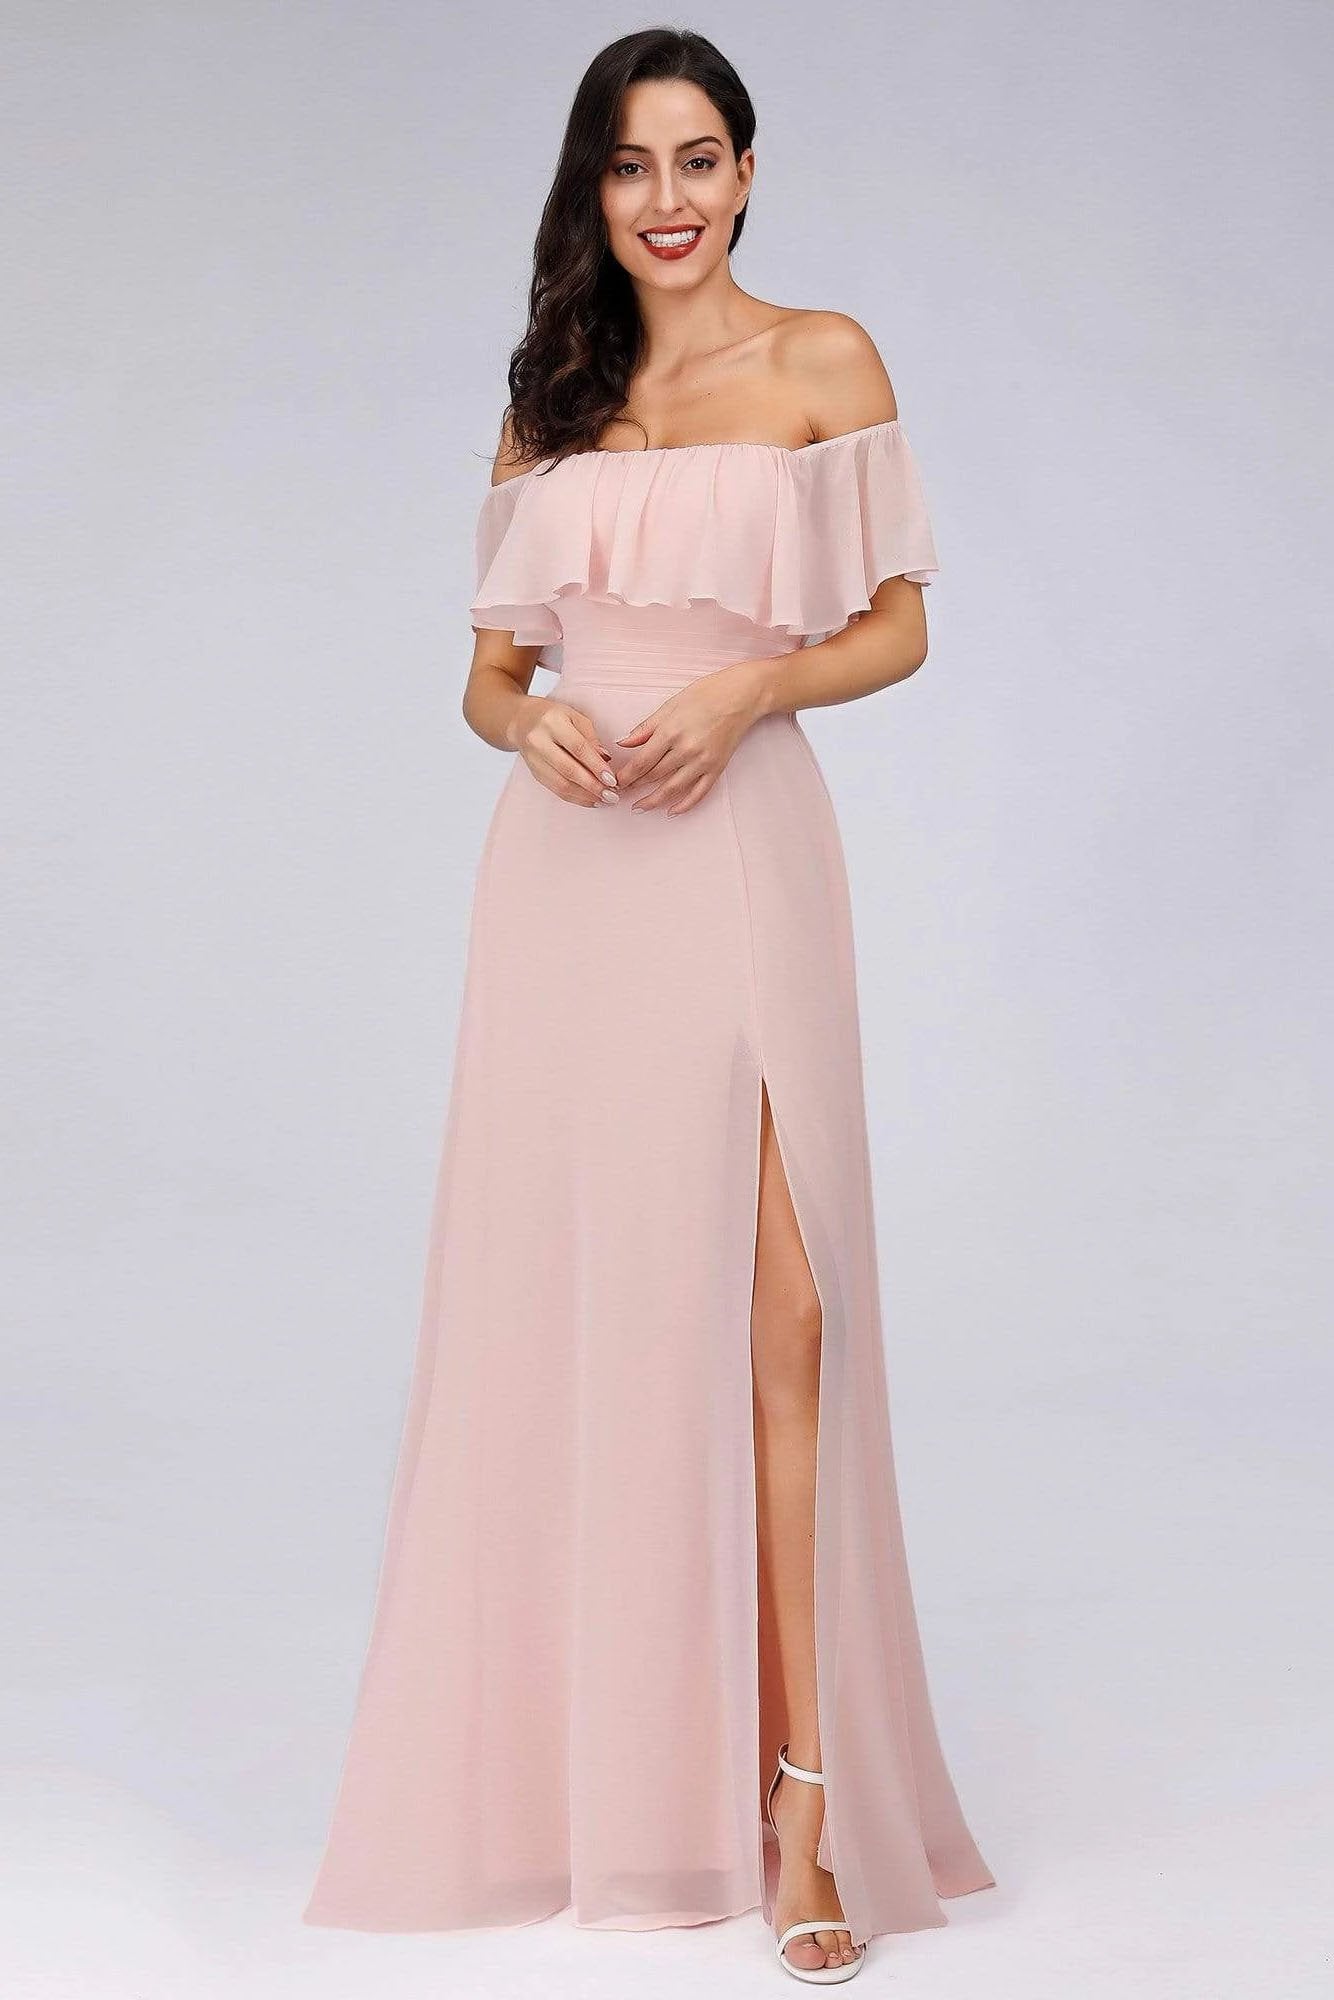 Charming Off Shoulder Ruffle Pink Chiffon Long Prom Dresses Bridesmaid Dresses STC15114